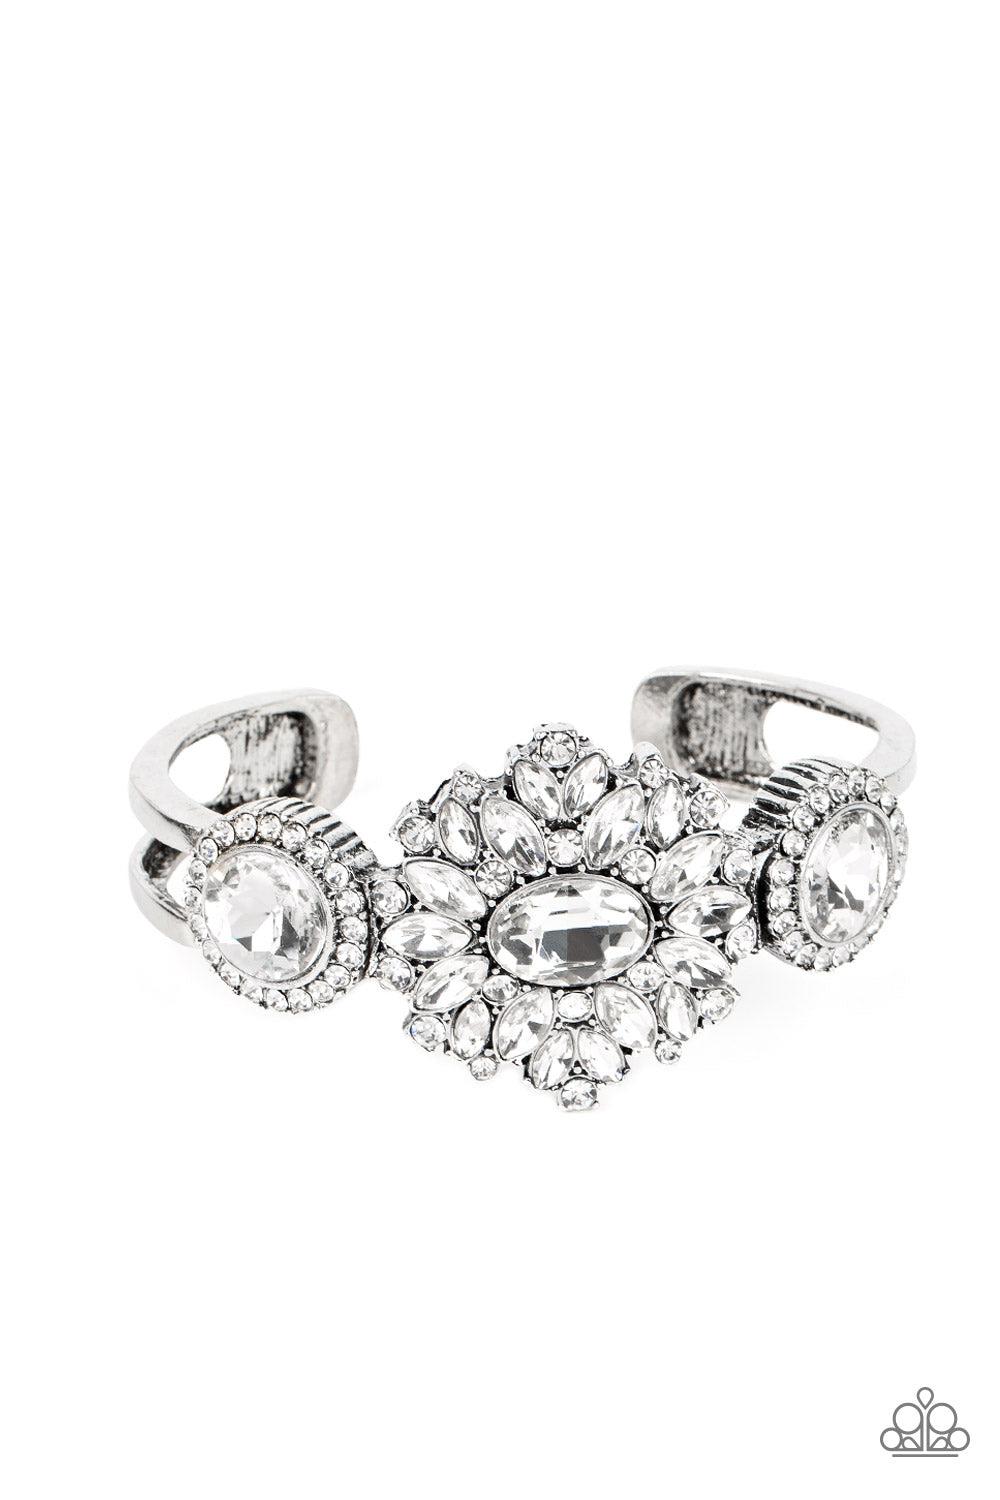 Daydream Dazzle White Rhinestone Cuff Bracelet - Paparazzi Accessories- lightbox - CarasShop.com - $5 Jewelry by Cara Jewels